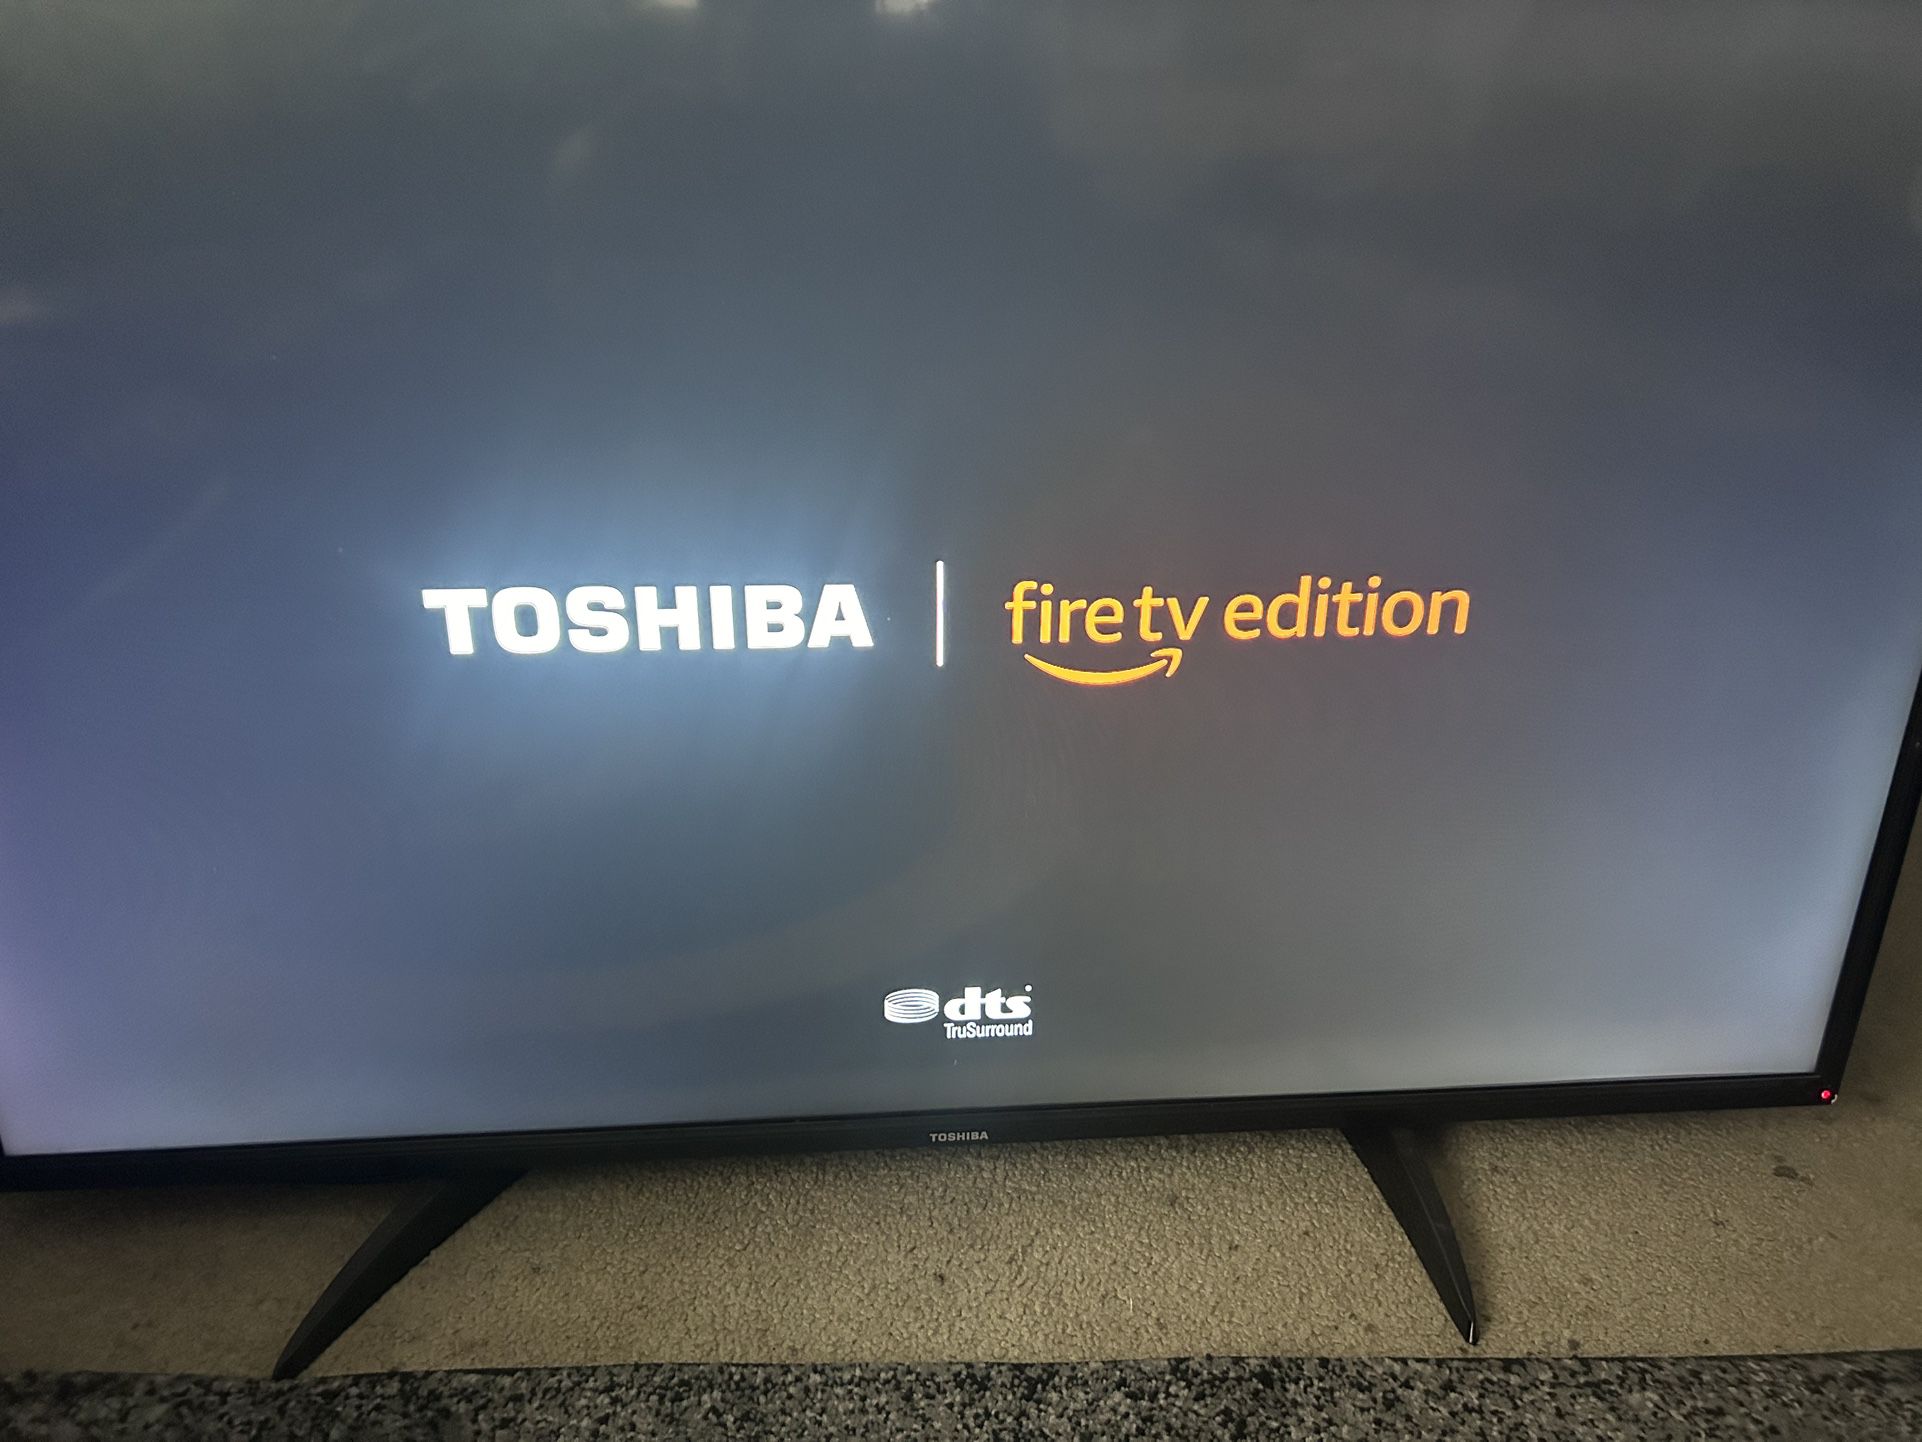 toshiba fire tv flat screen 